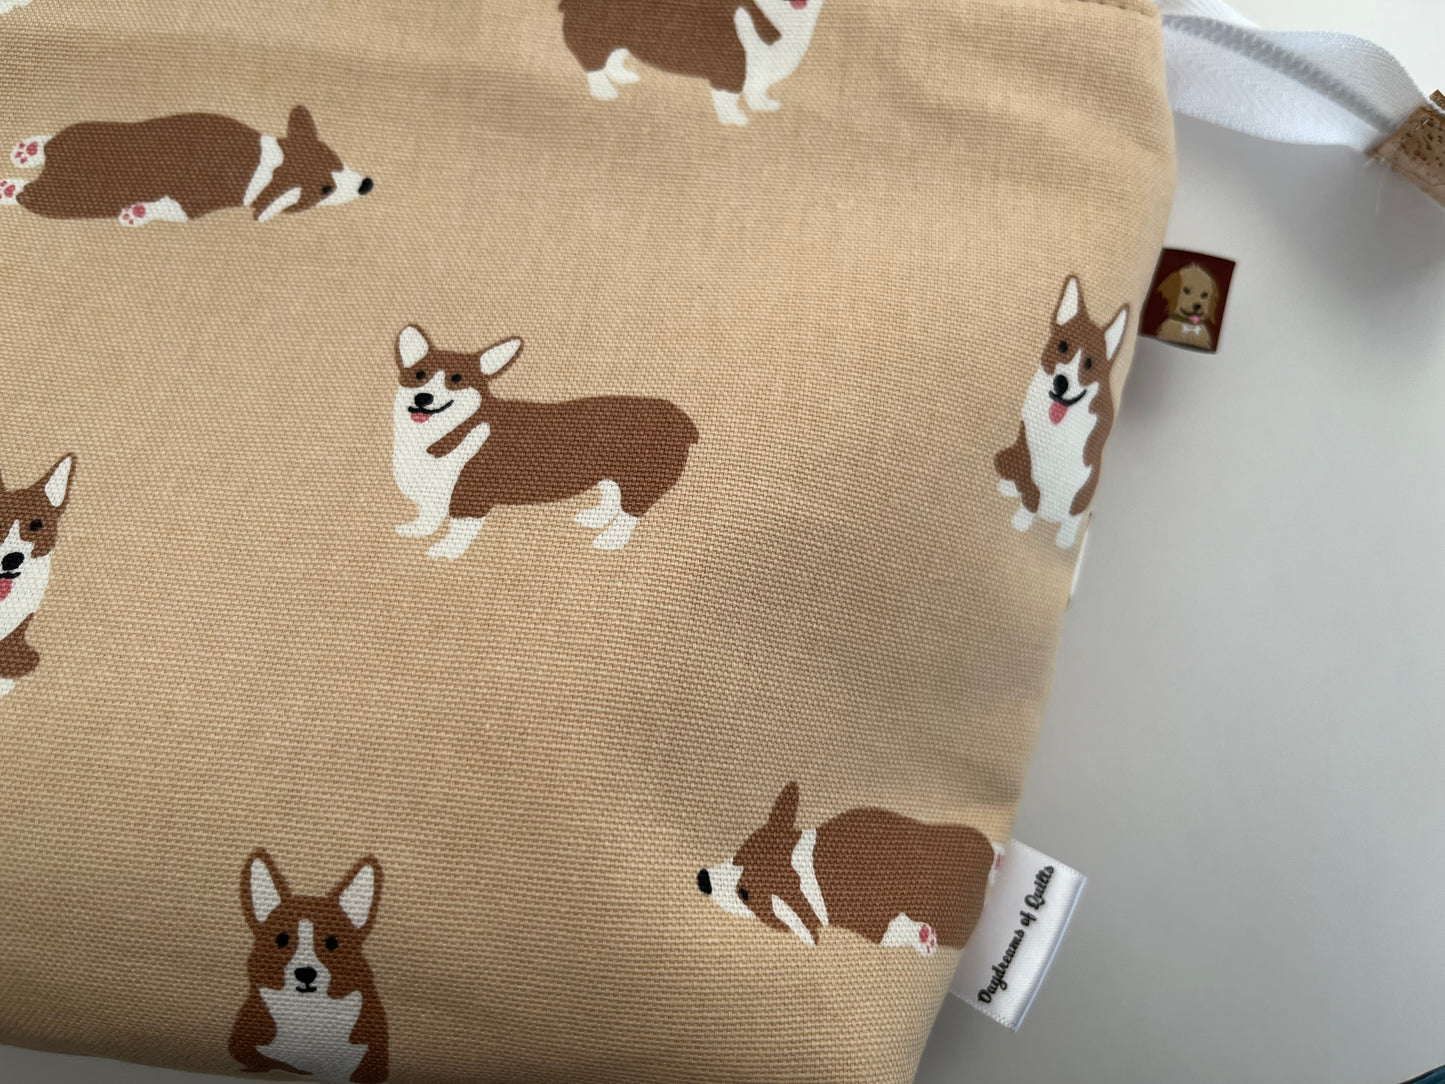 Corgi Dogs Cosmetics Bag Zipper Pouch